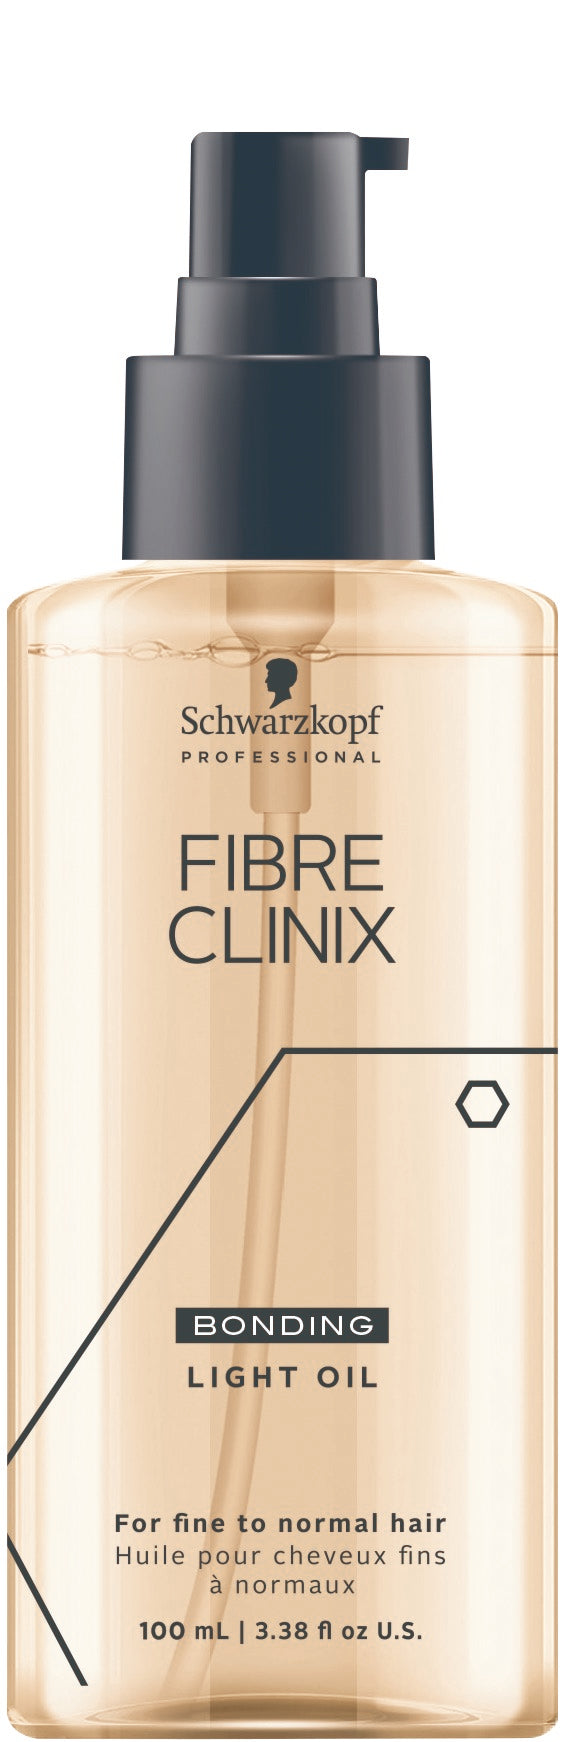 Fibre Clinix Bonding Light Oil by Schwarzkopf Professional at Eds Hair Bramhall